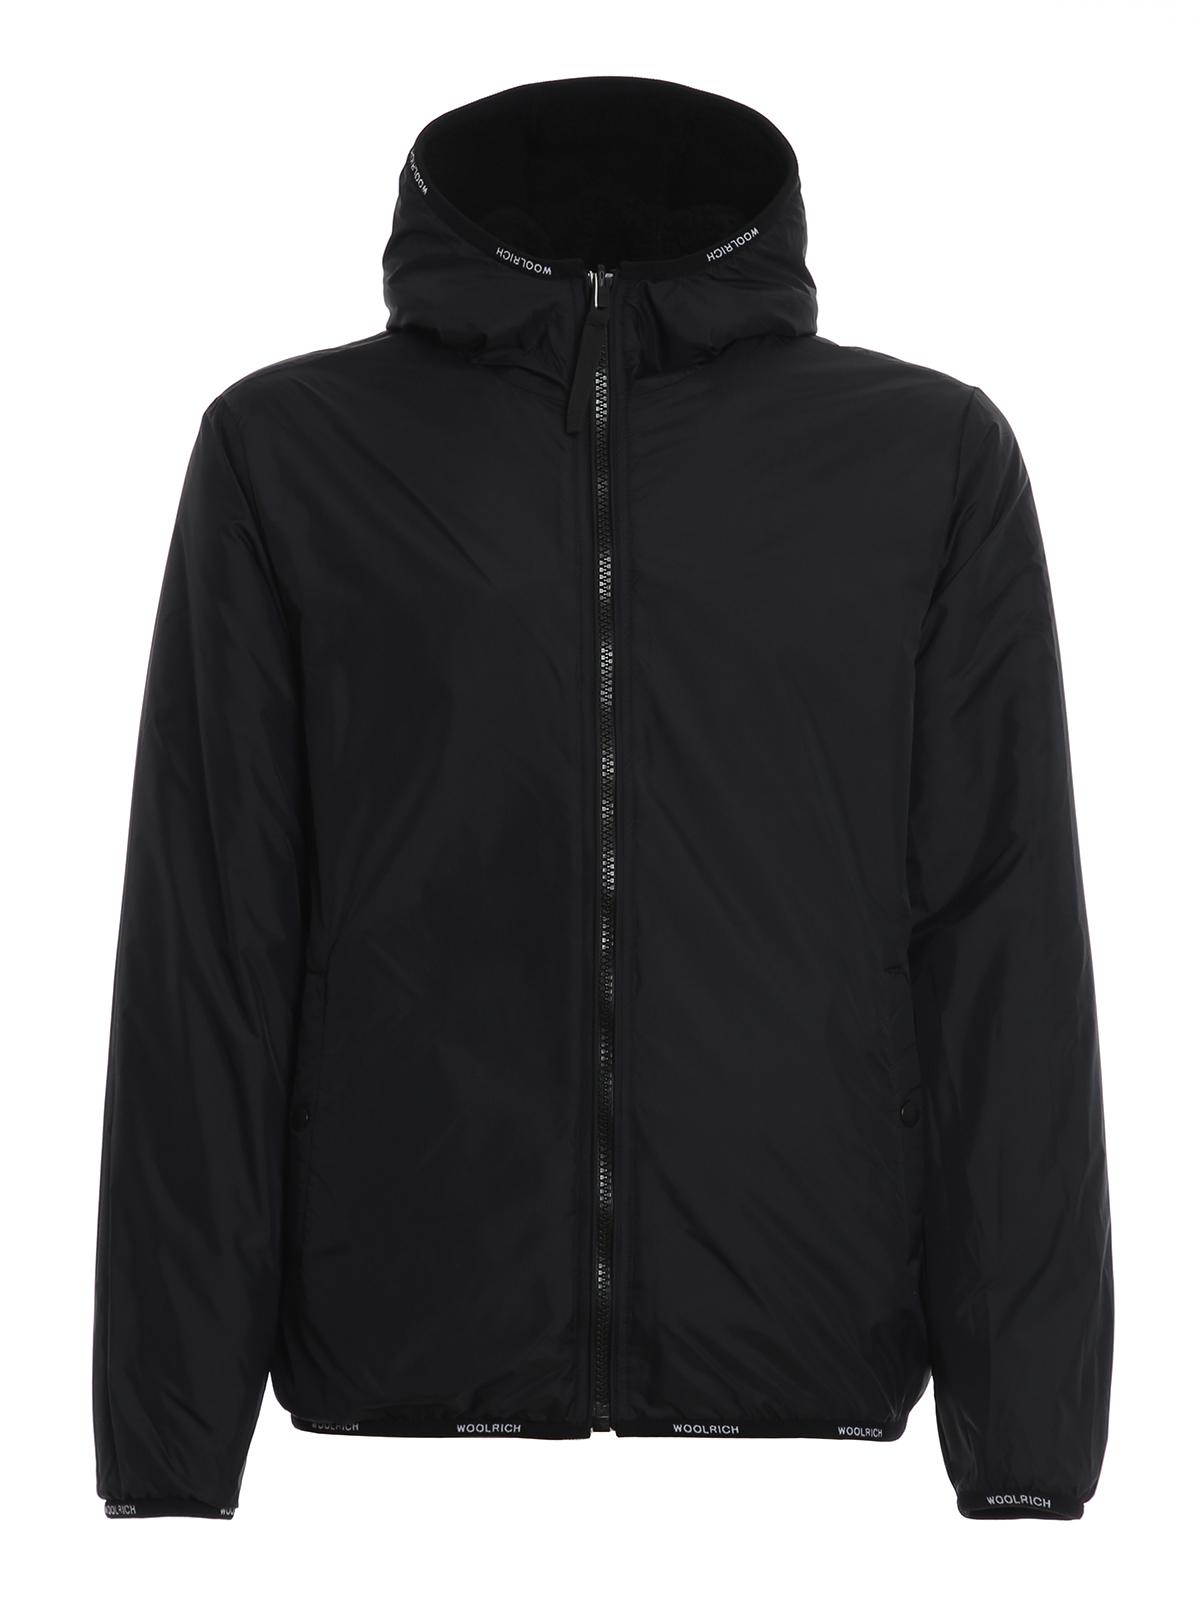 Woolrich Reversible Hooded Jacket in Black for Men - Lyst